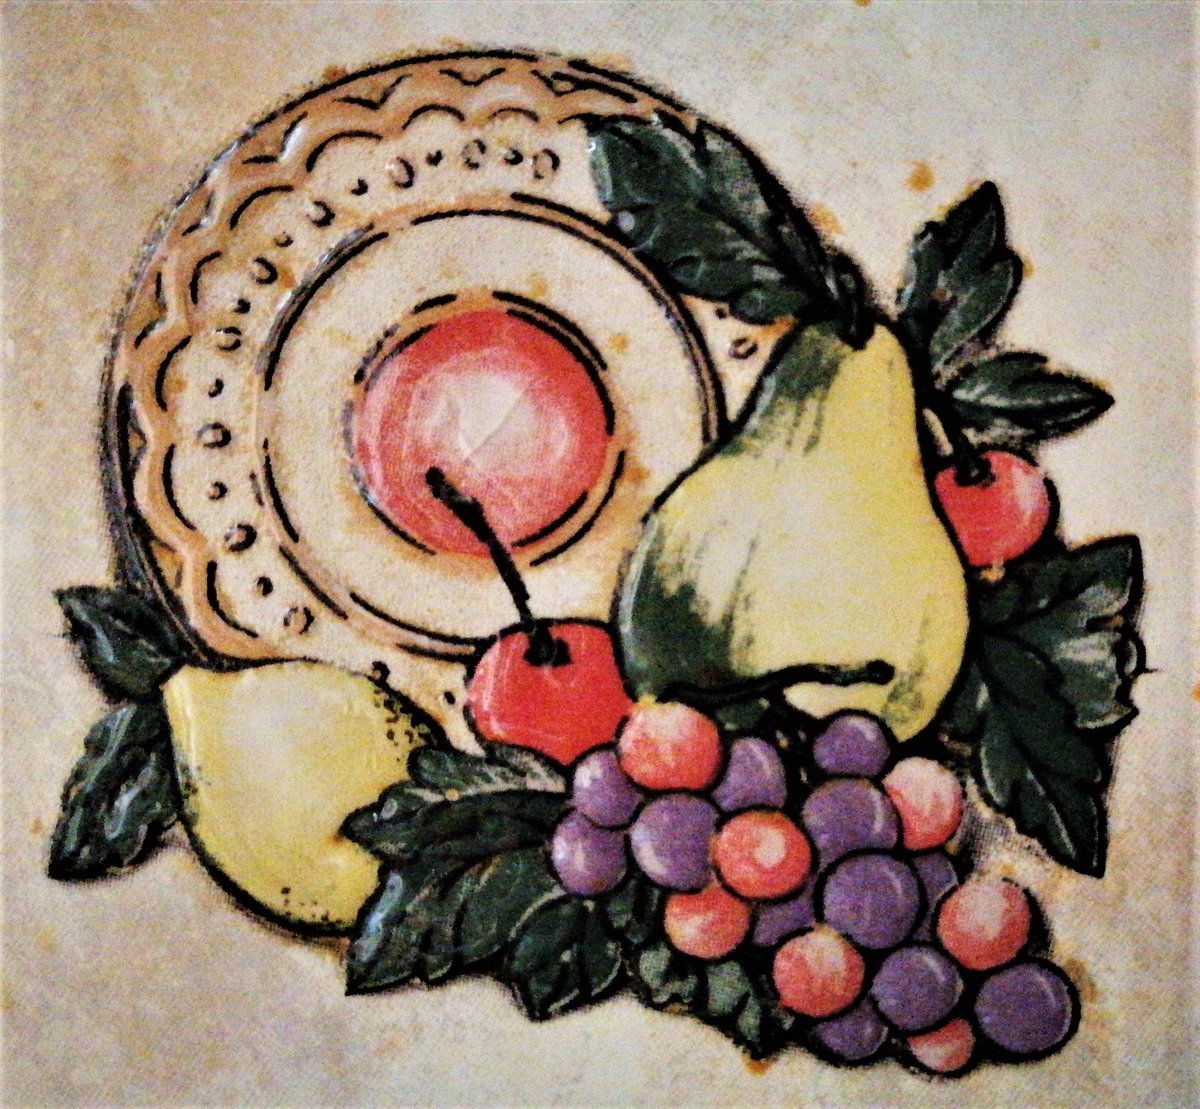 дуэт на кухню: тарелка с фруктами(20на19см)св - дуэт, кухня, тарелка, фрукты - оригинал